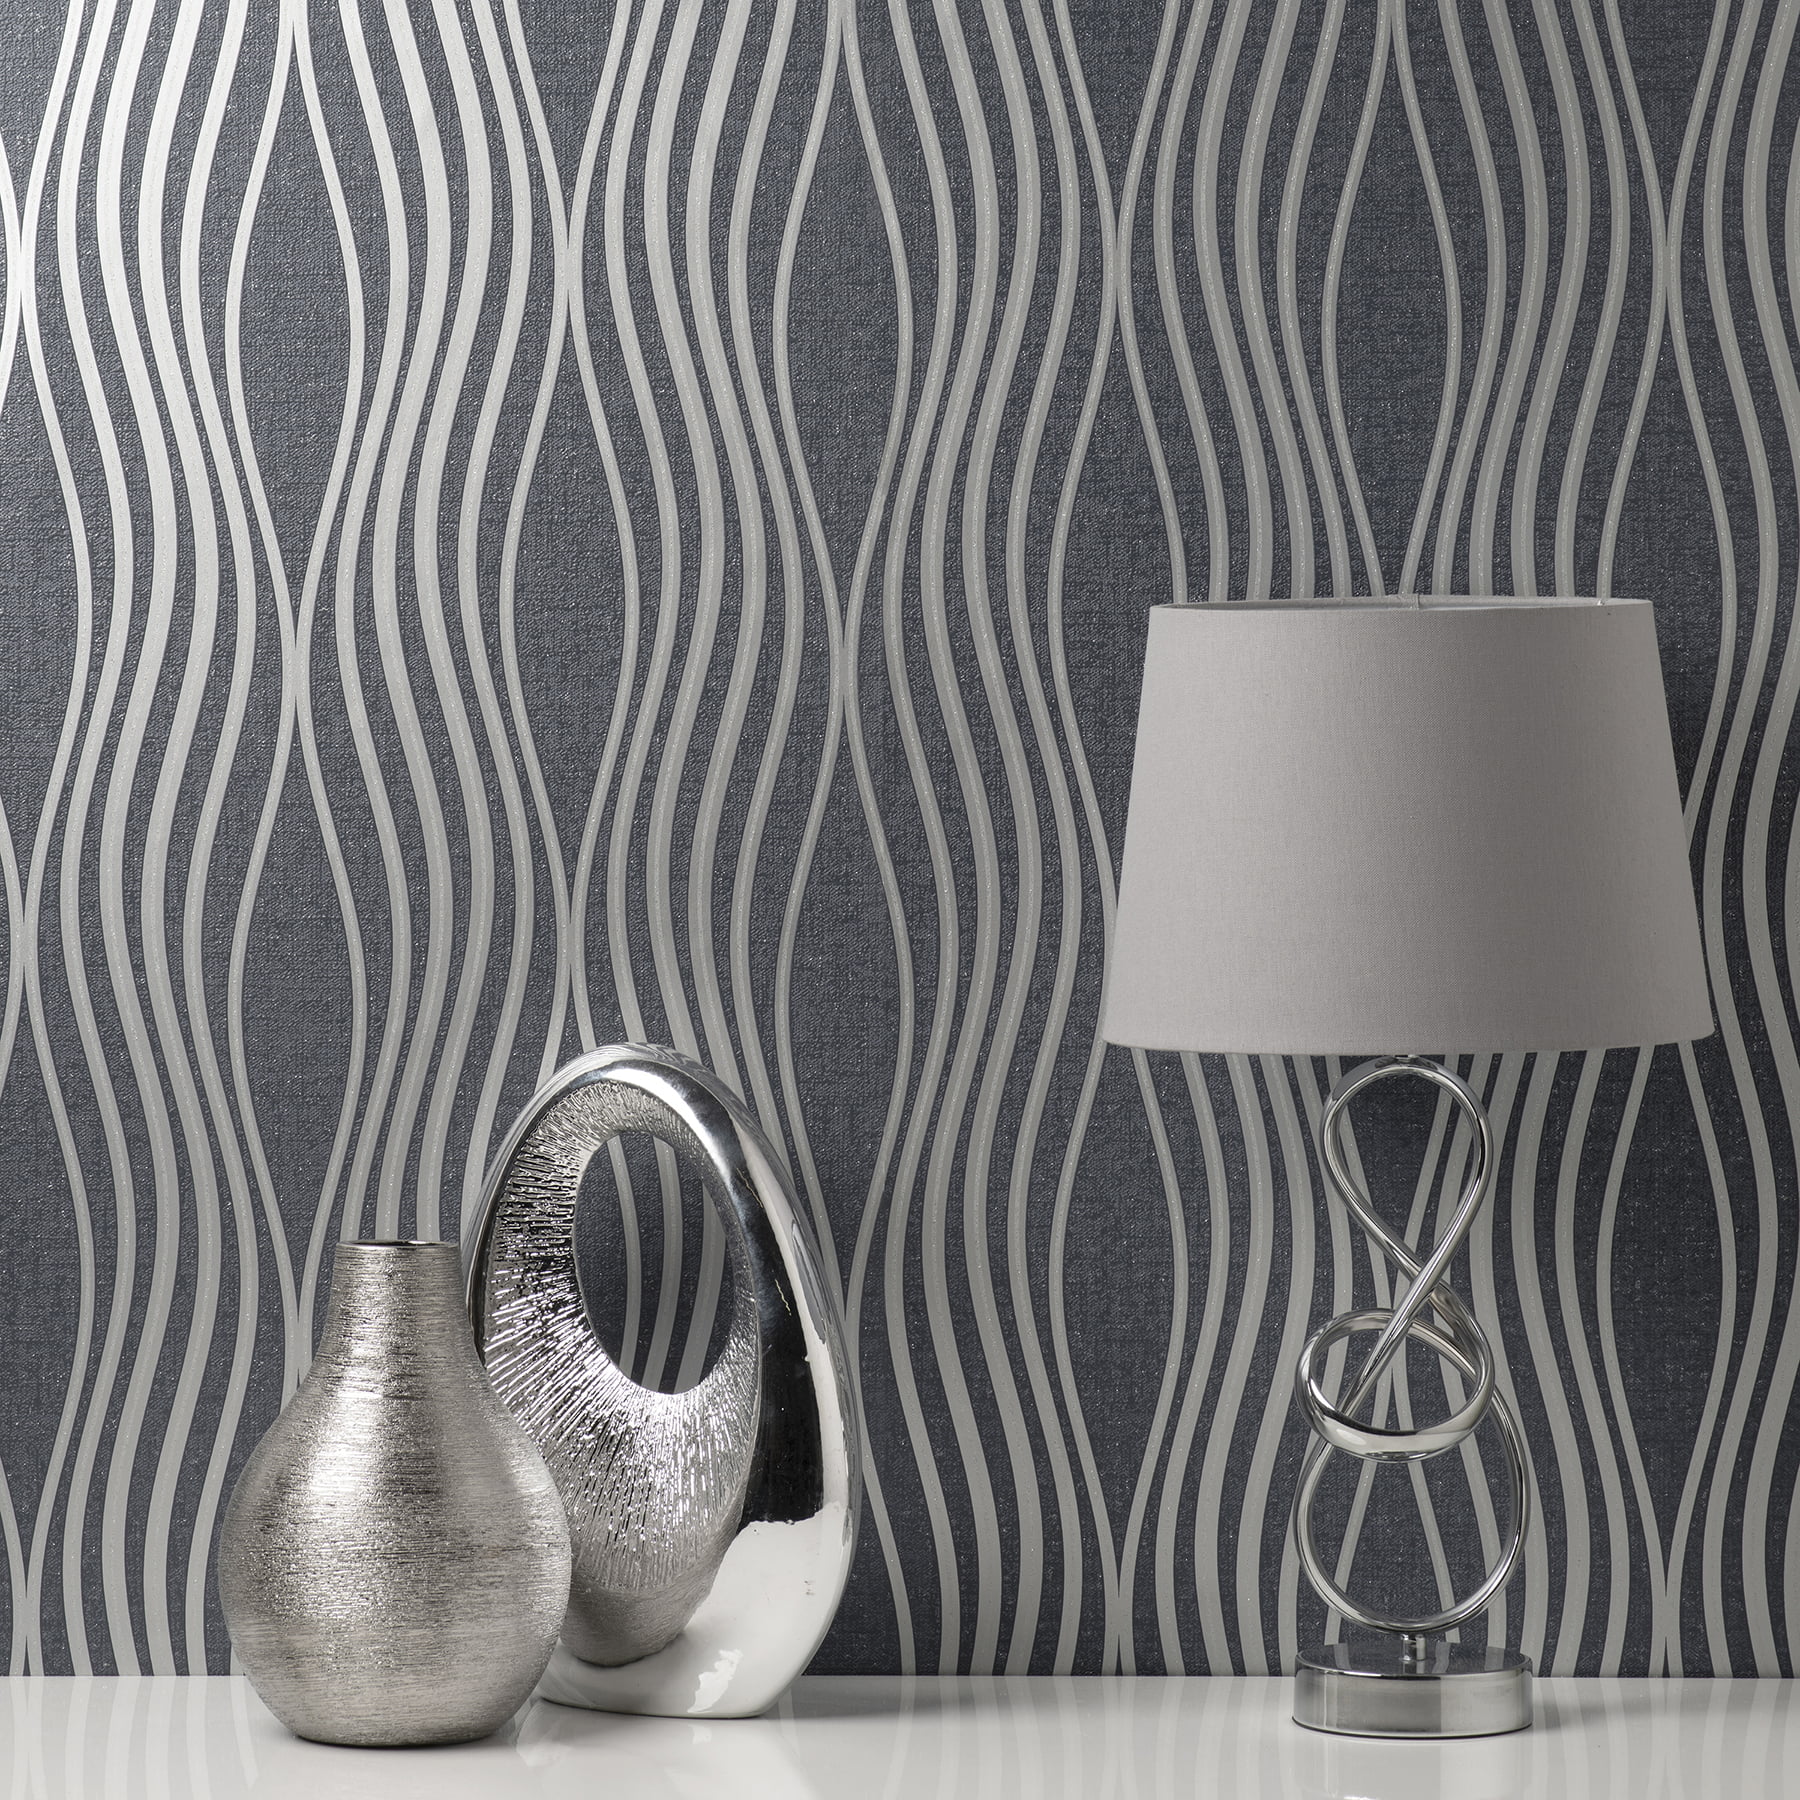 Quartz Light Grey and Silver Wave Wallpaper Modern Design by Fine Decor FD42567 